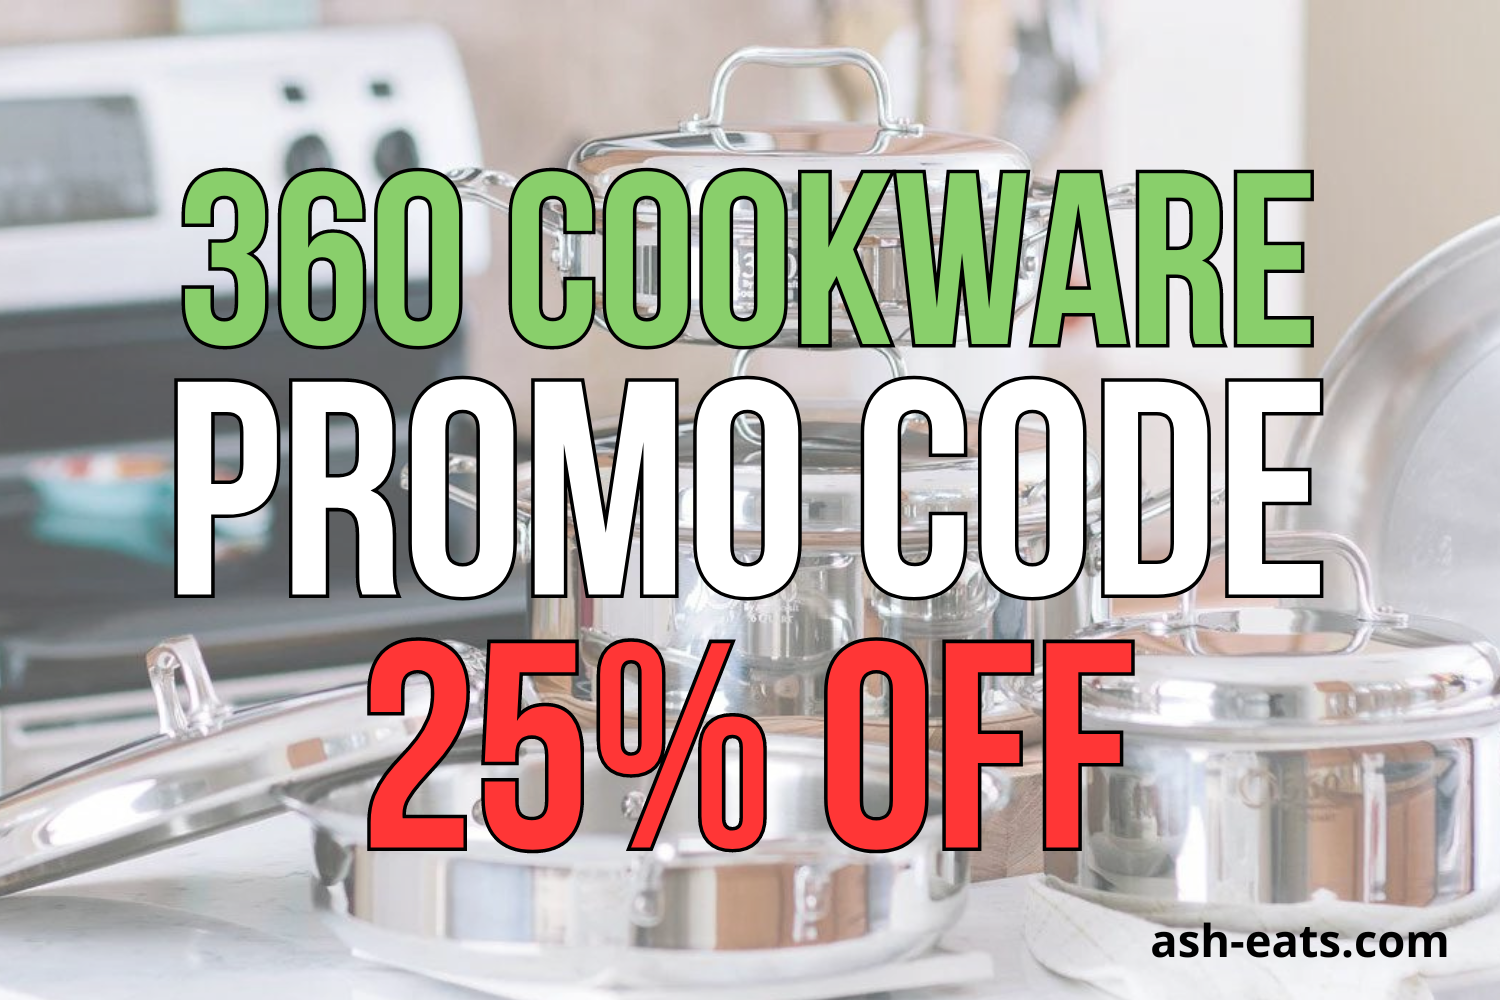 360 cookware promo code